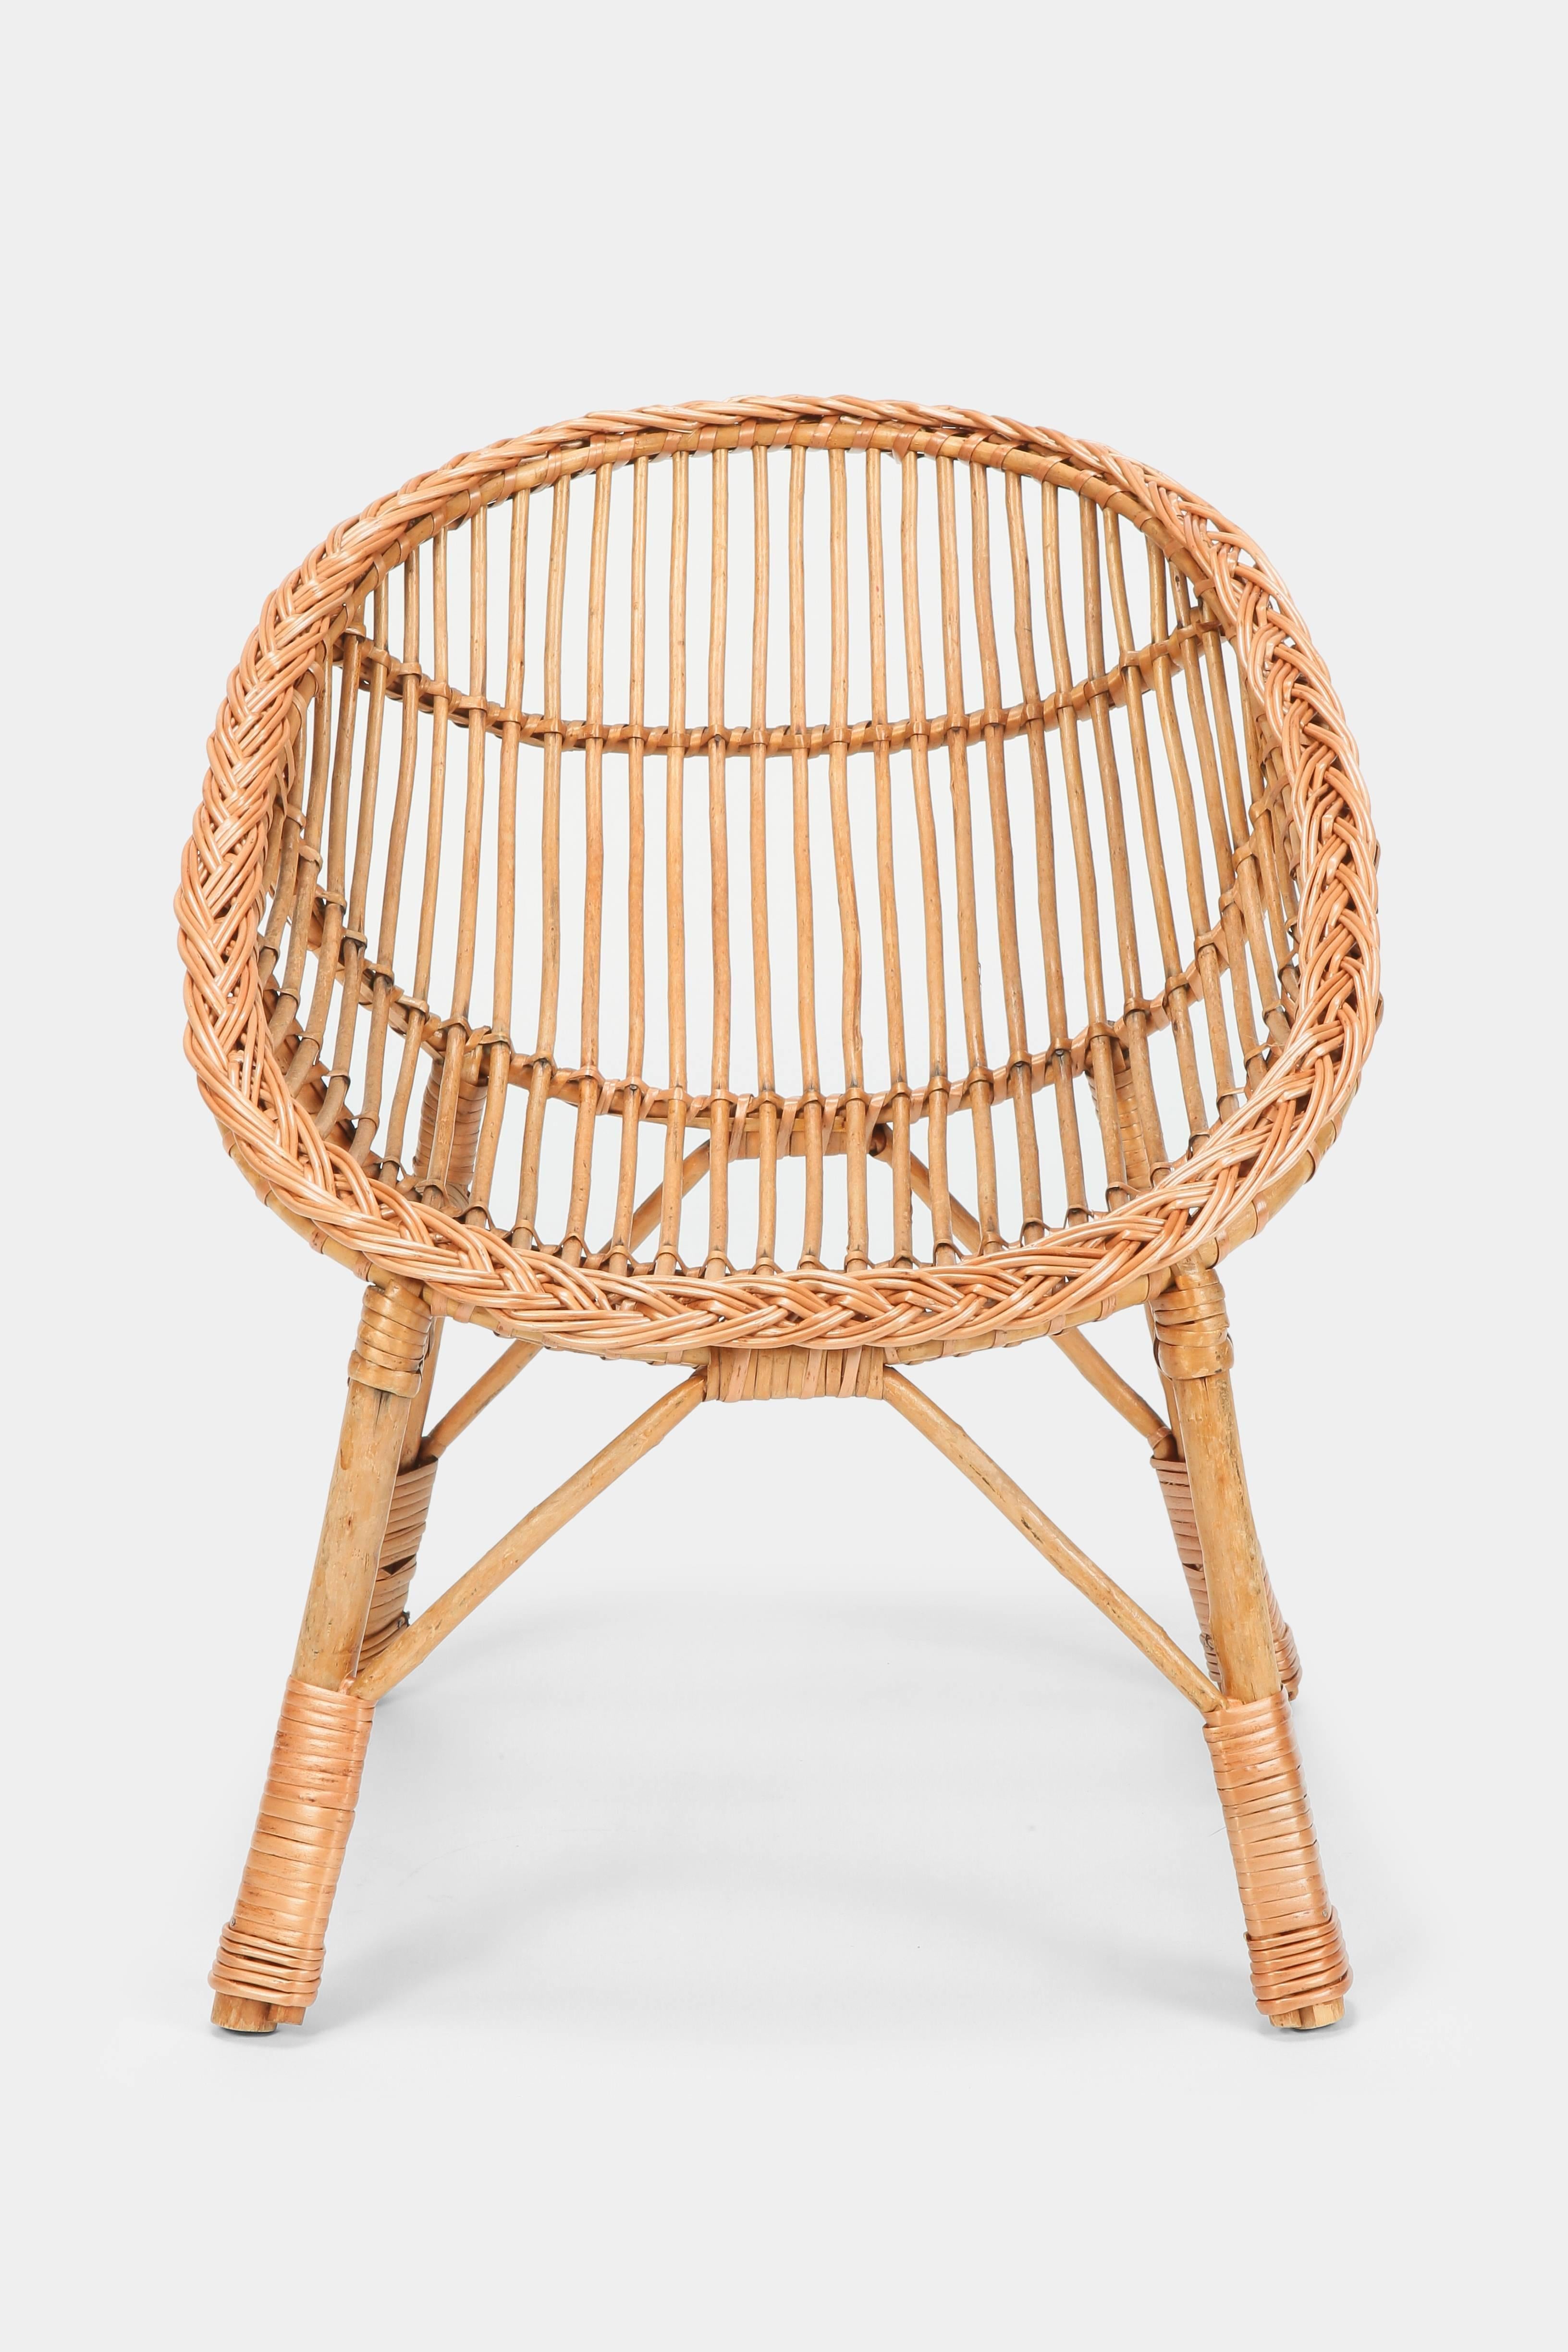 Mid-Century Modern Italian Rattan Children’s Chair 1950s For Sale